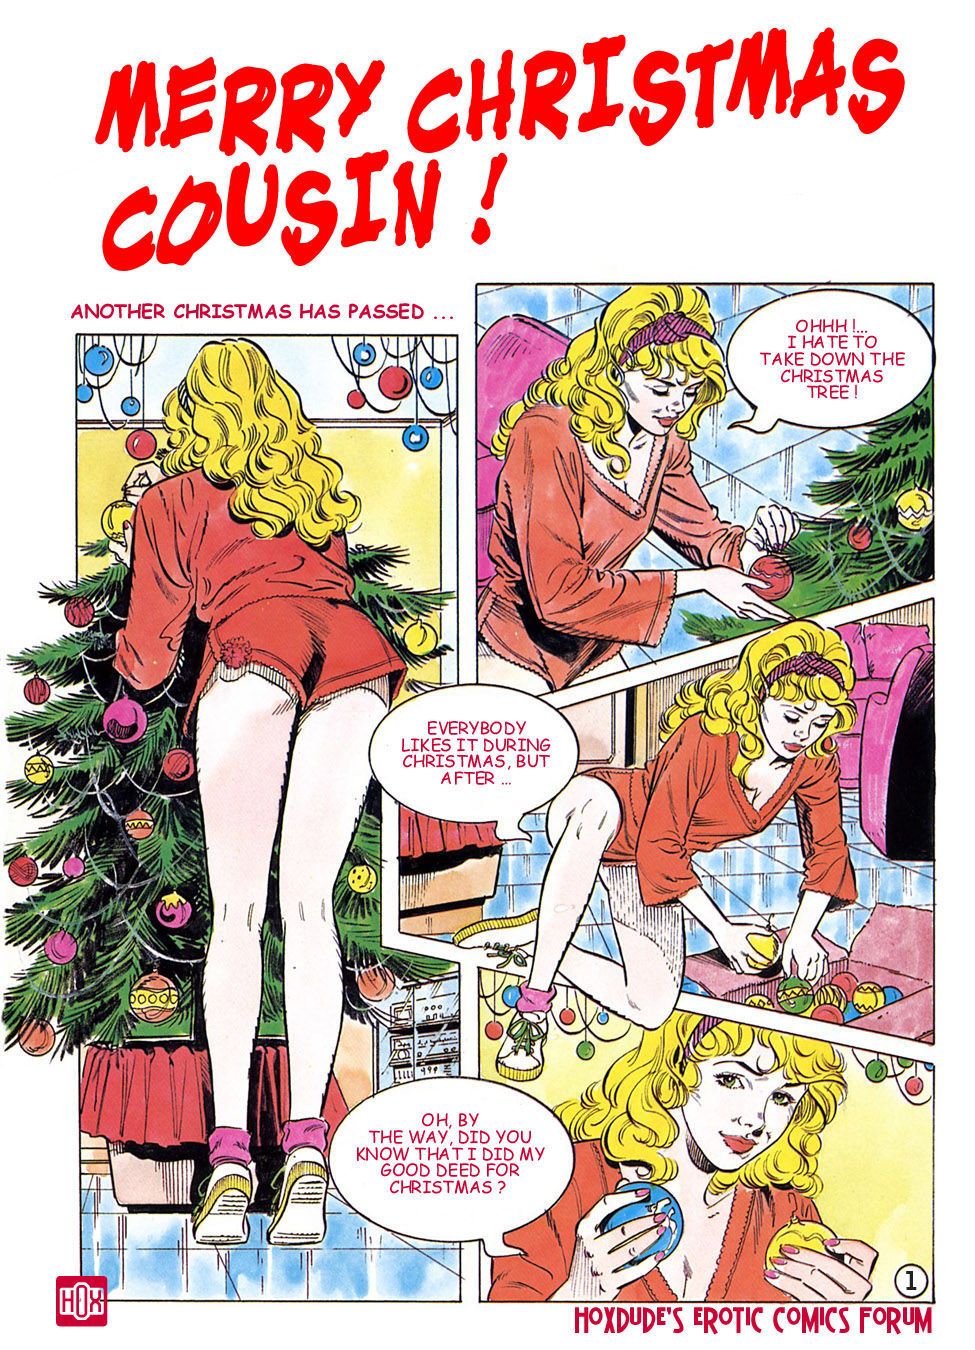 dino leonetti Joyeux Noël cousin! {loops}